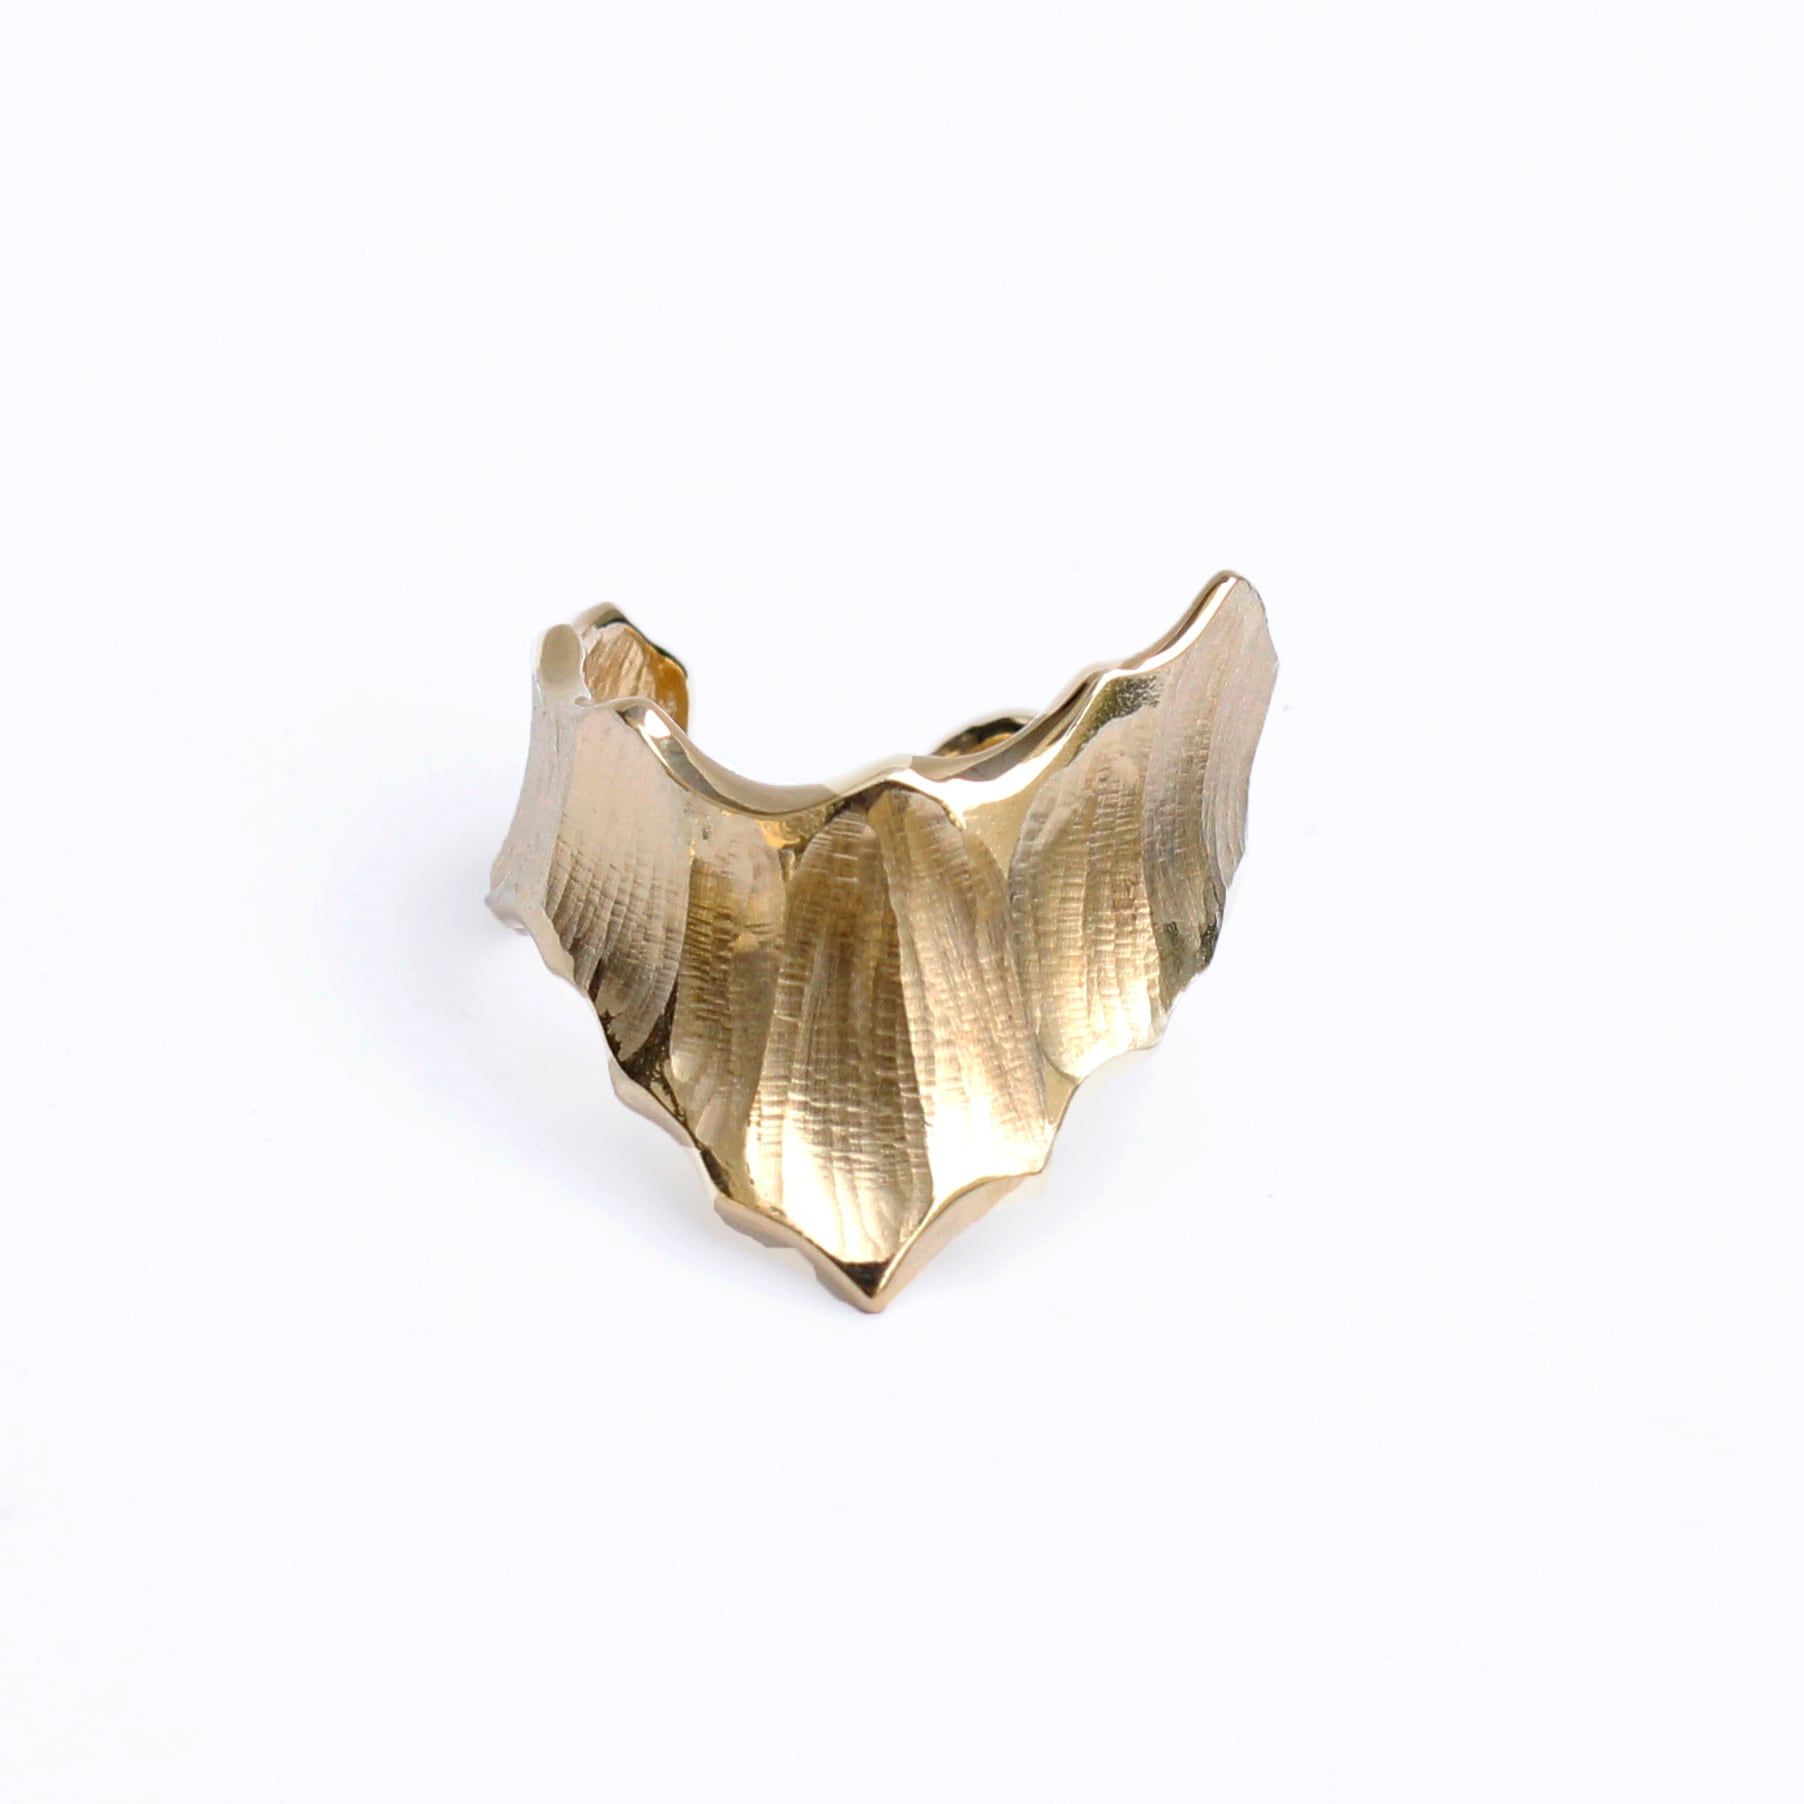 conoa (コノア) 氷山の指飾り gold